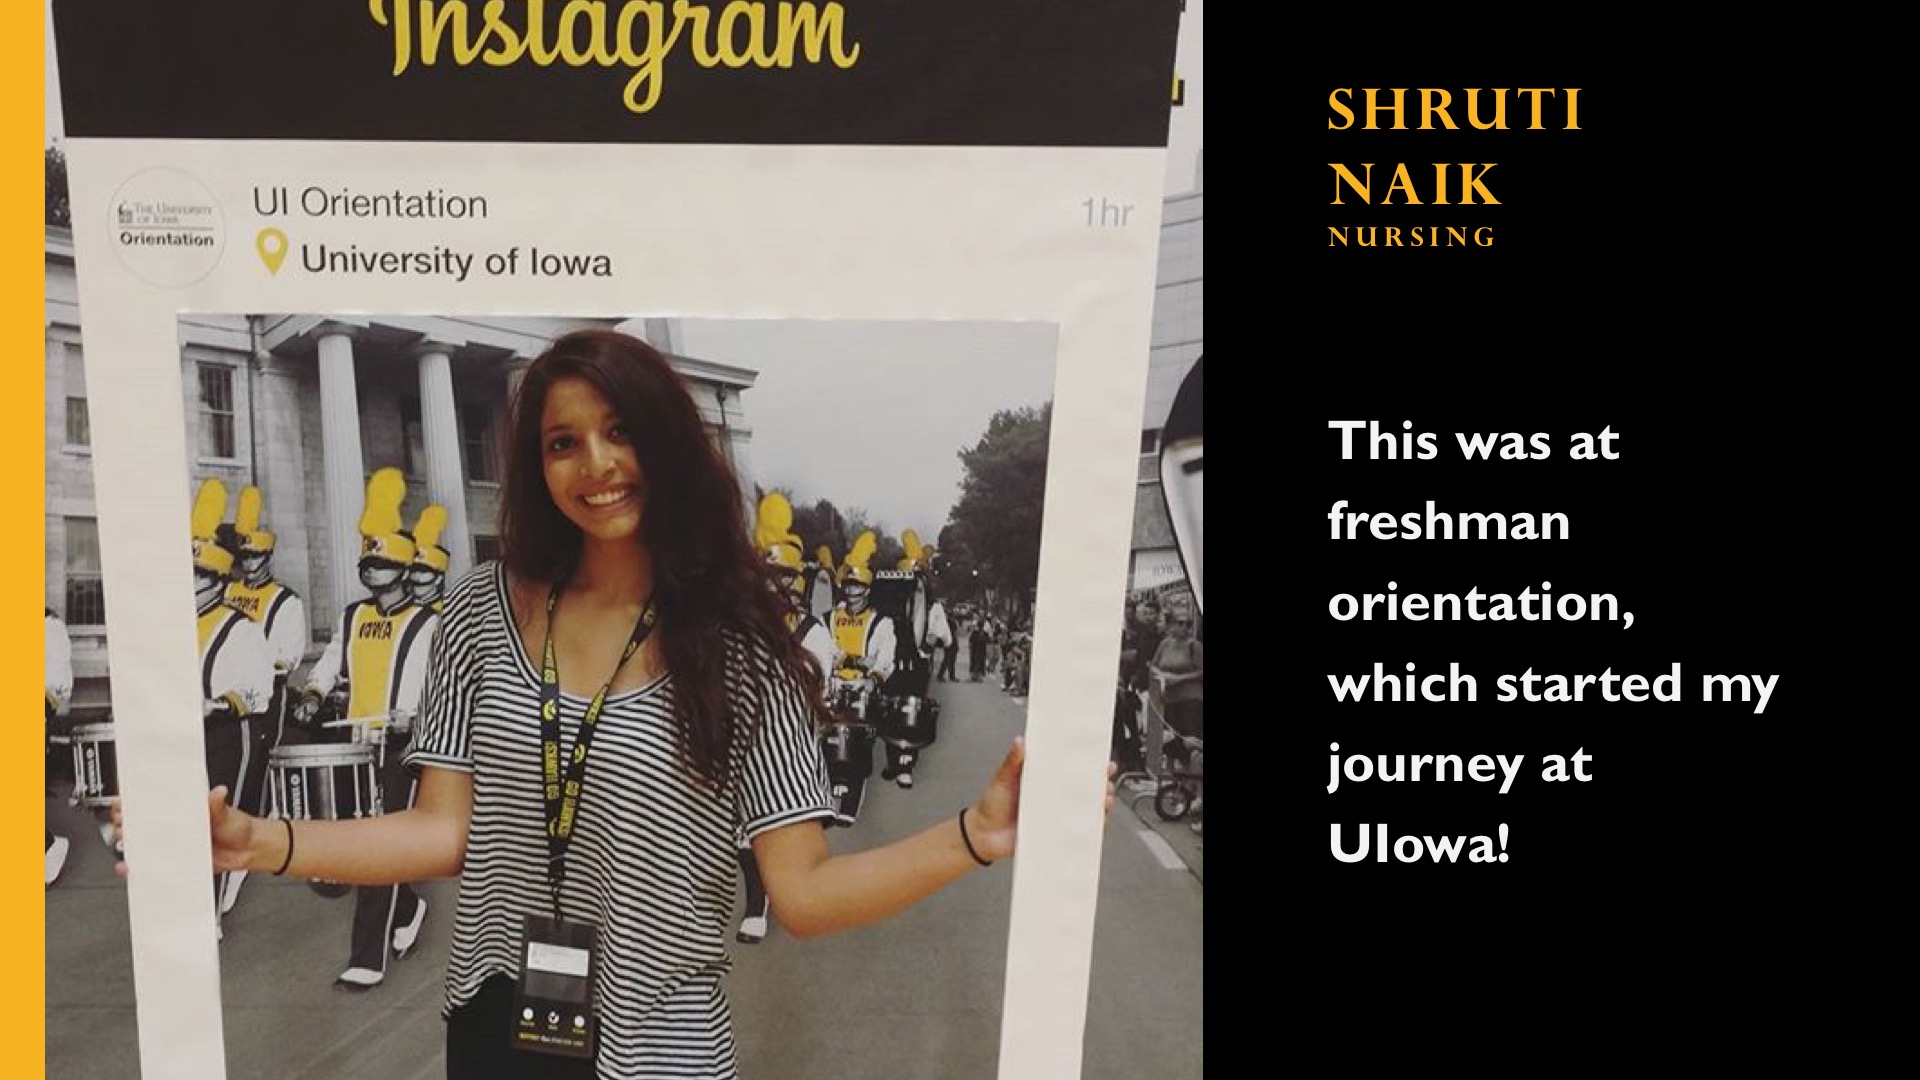 Shruti Naik. Nursing. This was at my freshman orientation, which started my journey at Uiowa!